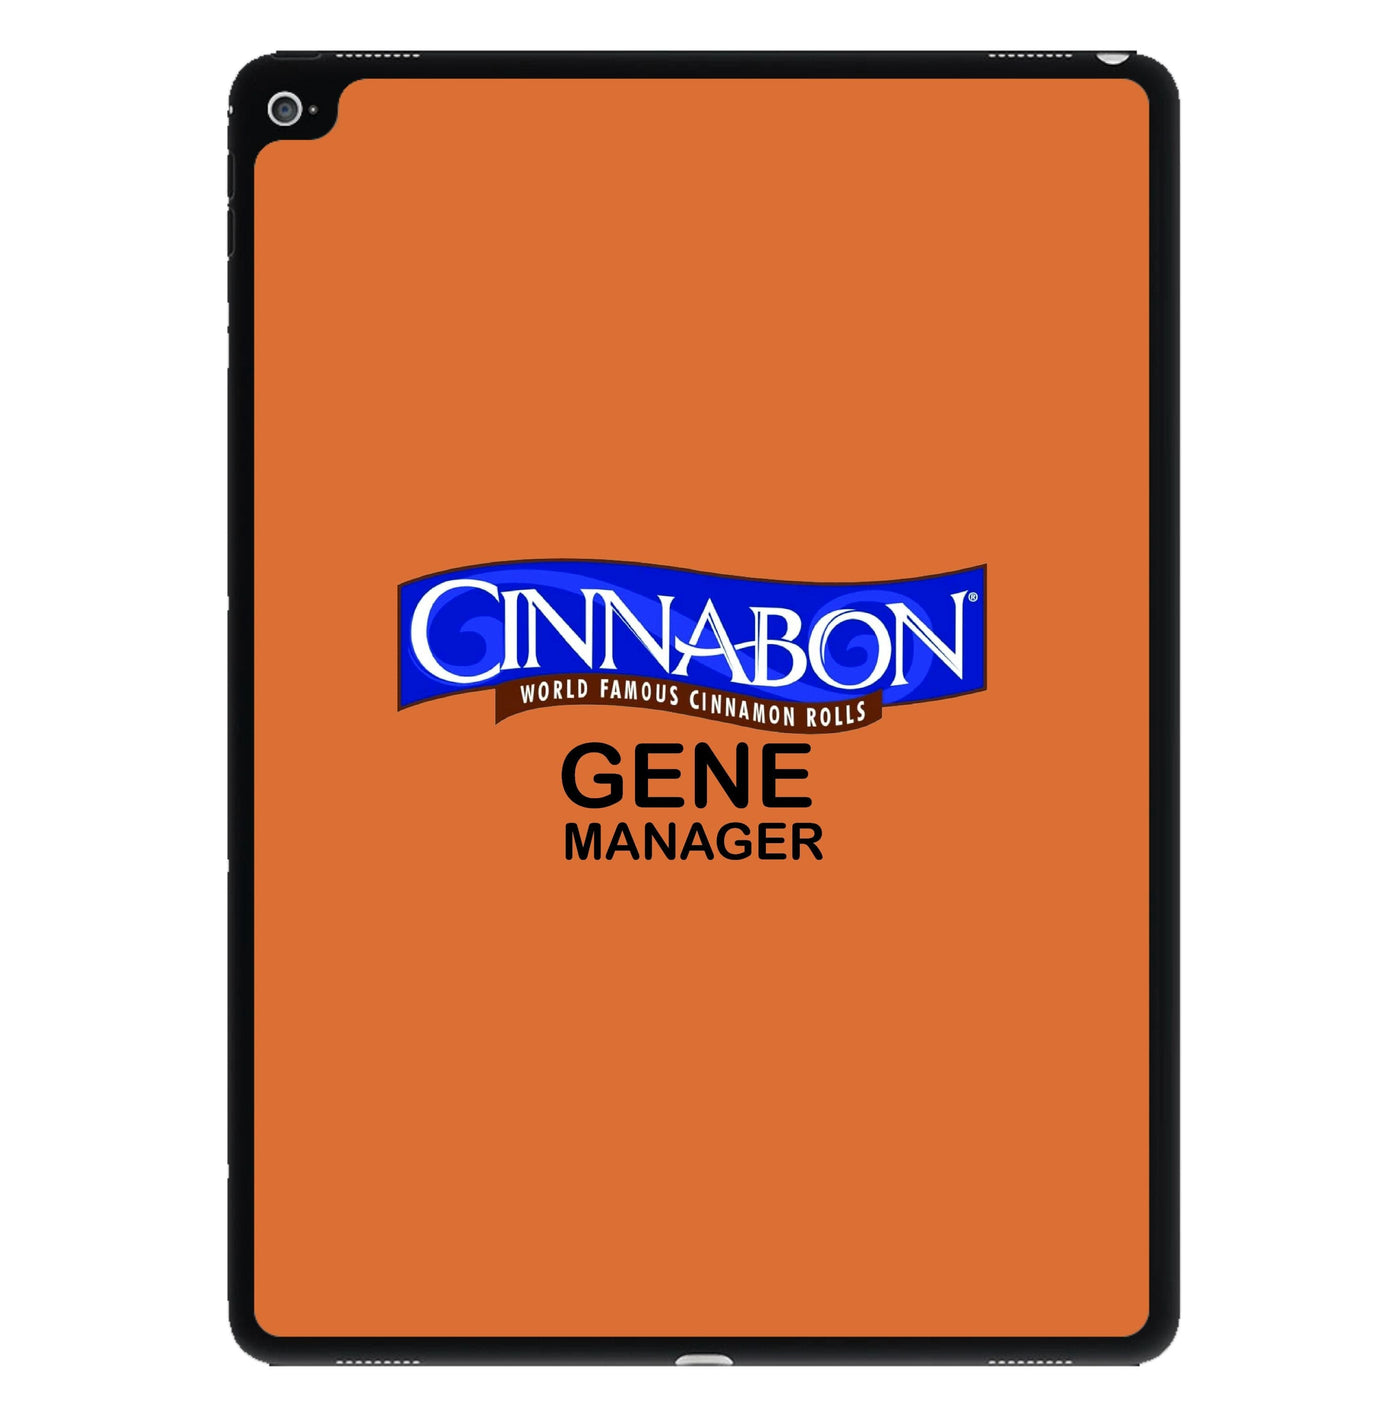 Cinnabon Gene Manager - Better Call Saul iPad Case